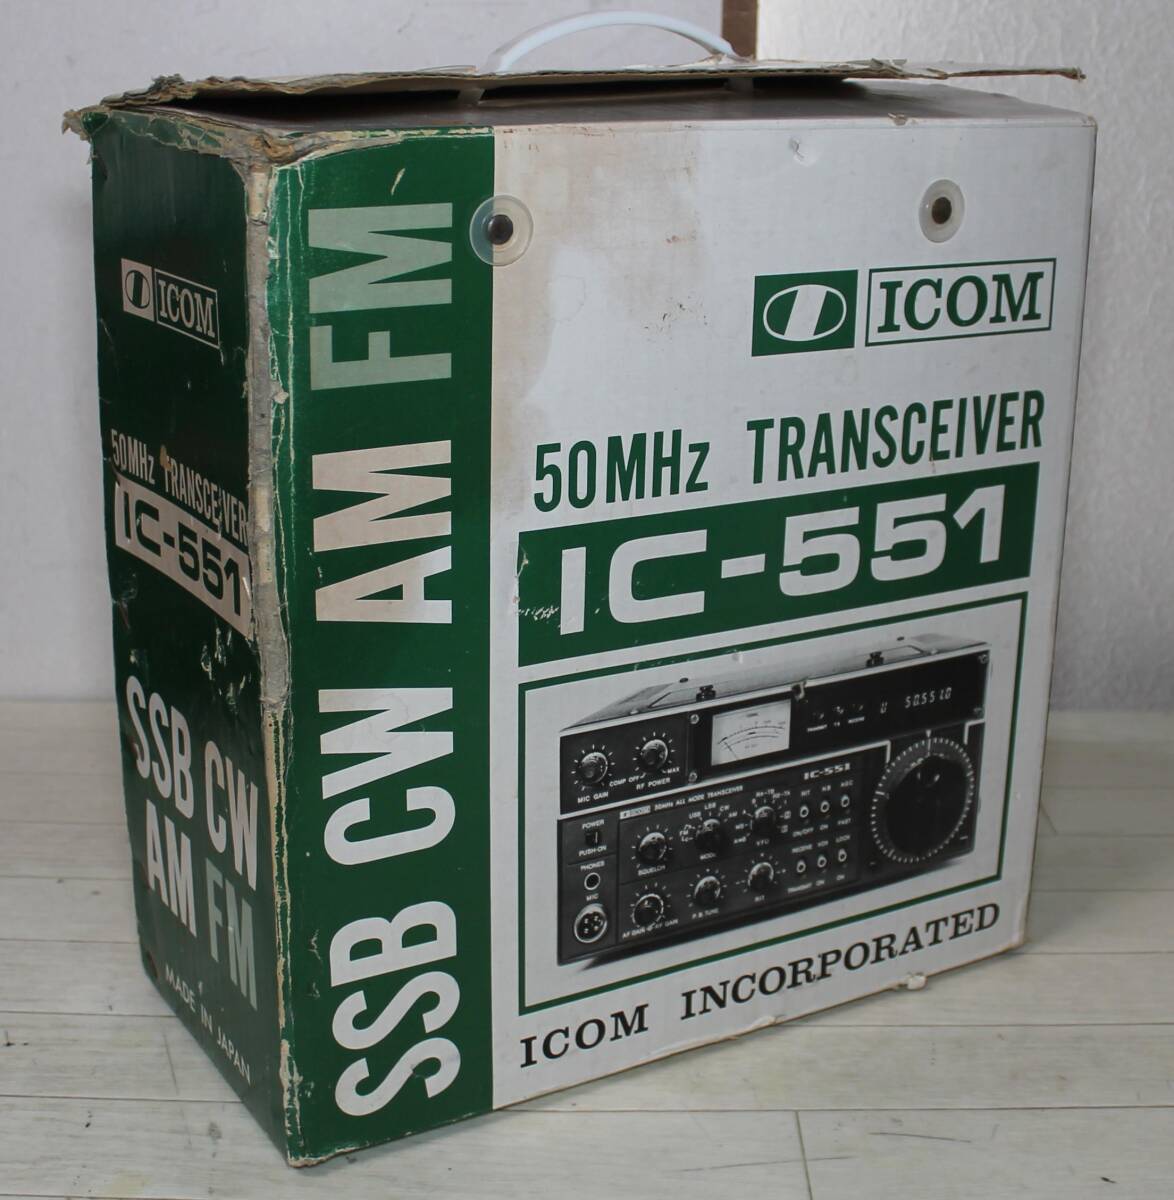 ICOM Icom 50MHz приемопередатчик IC-551 Junk [W31]